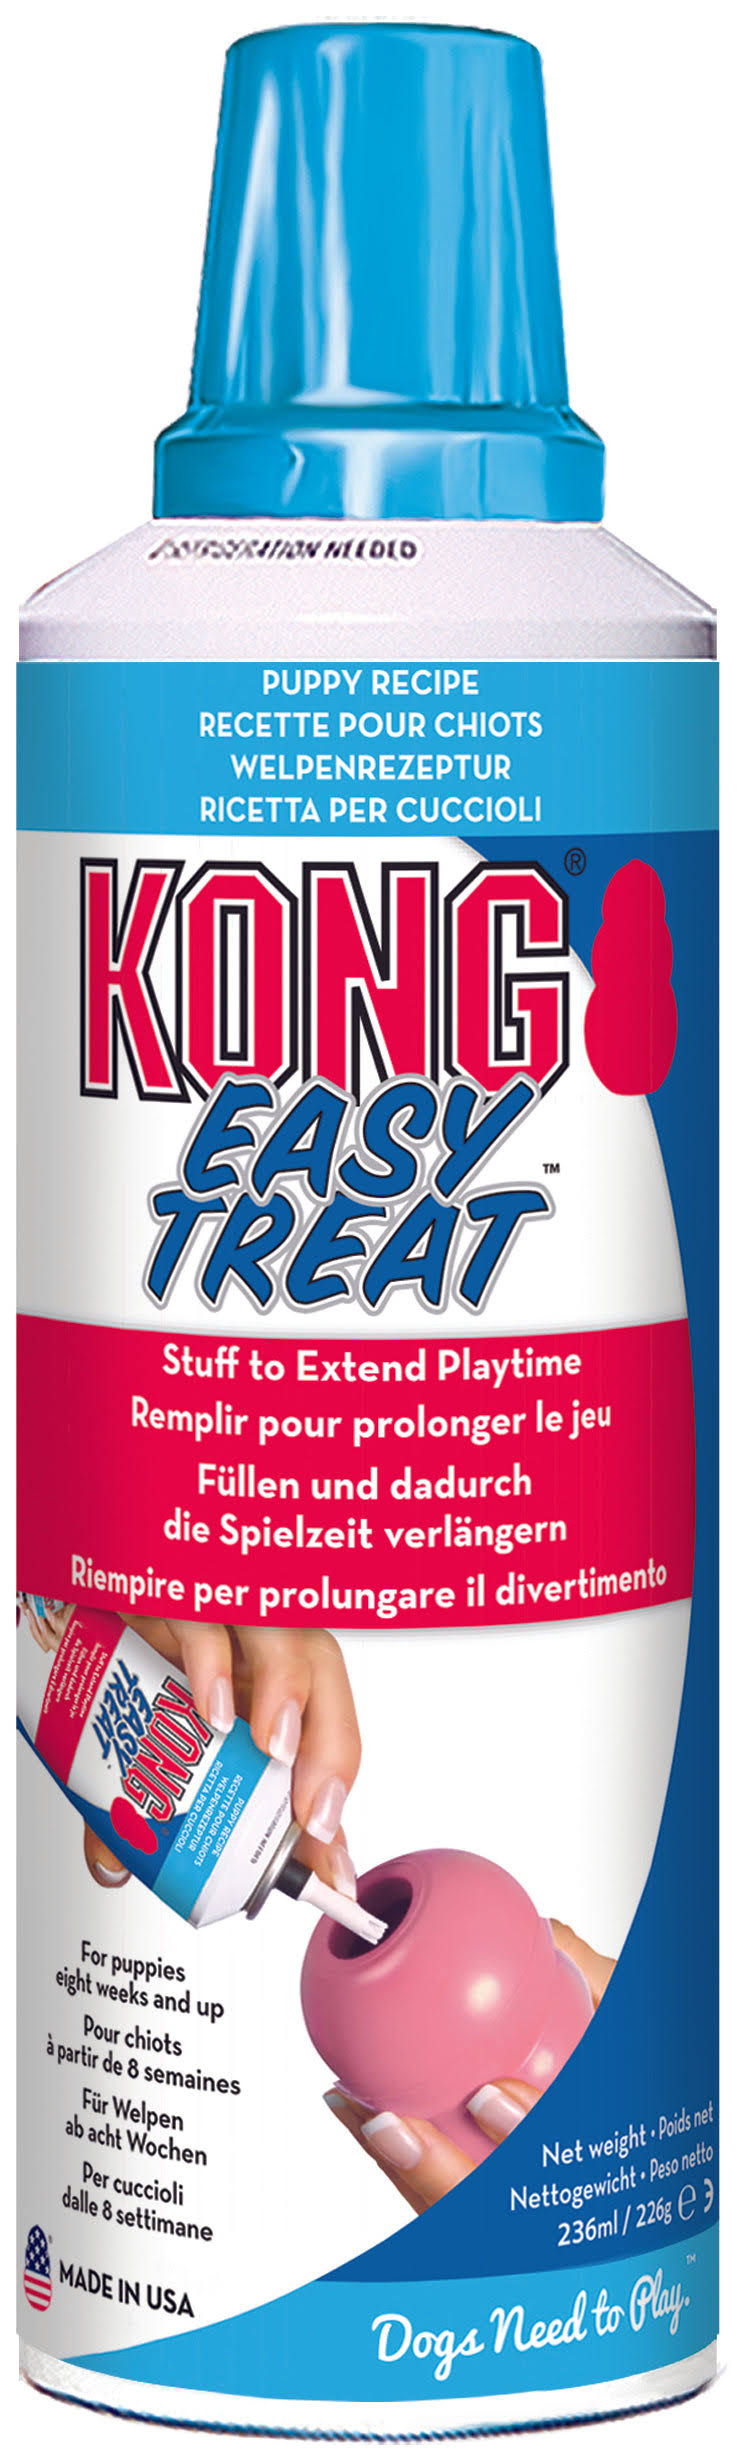 Kong Stuff'n Easy Treat - Puppy